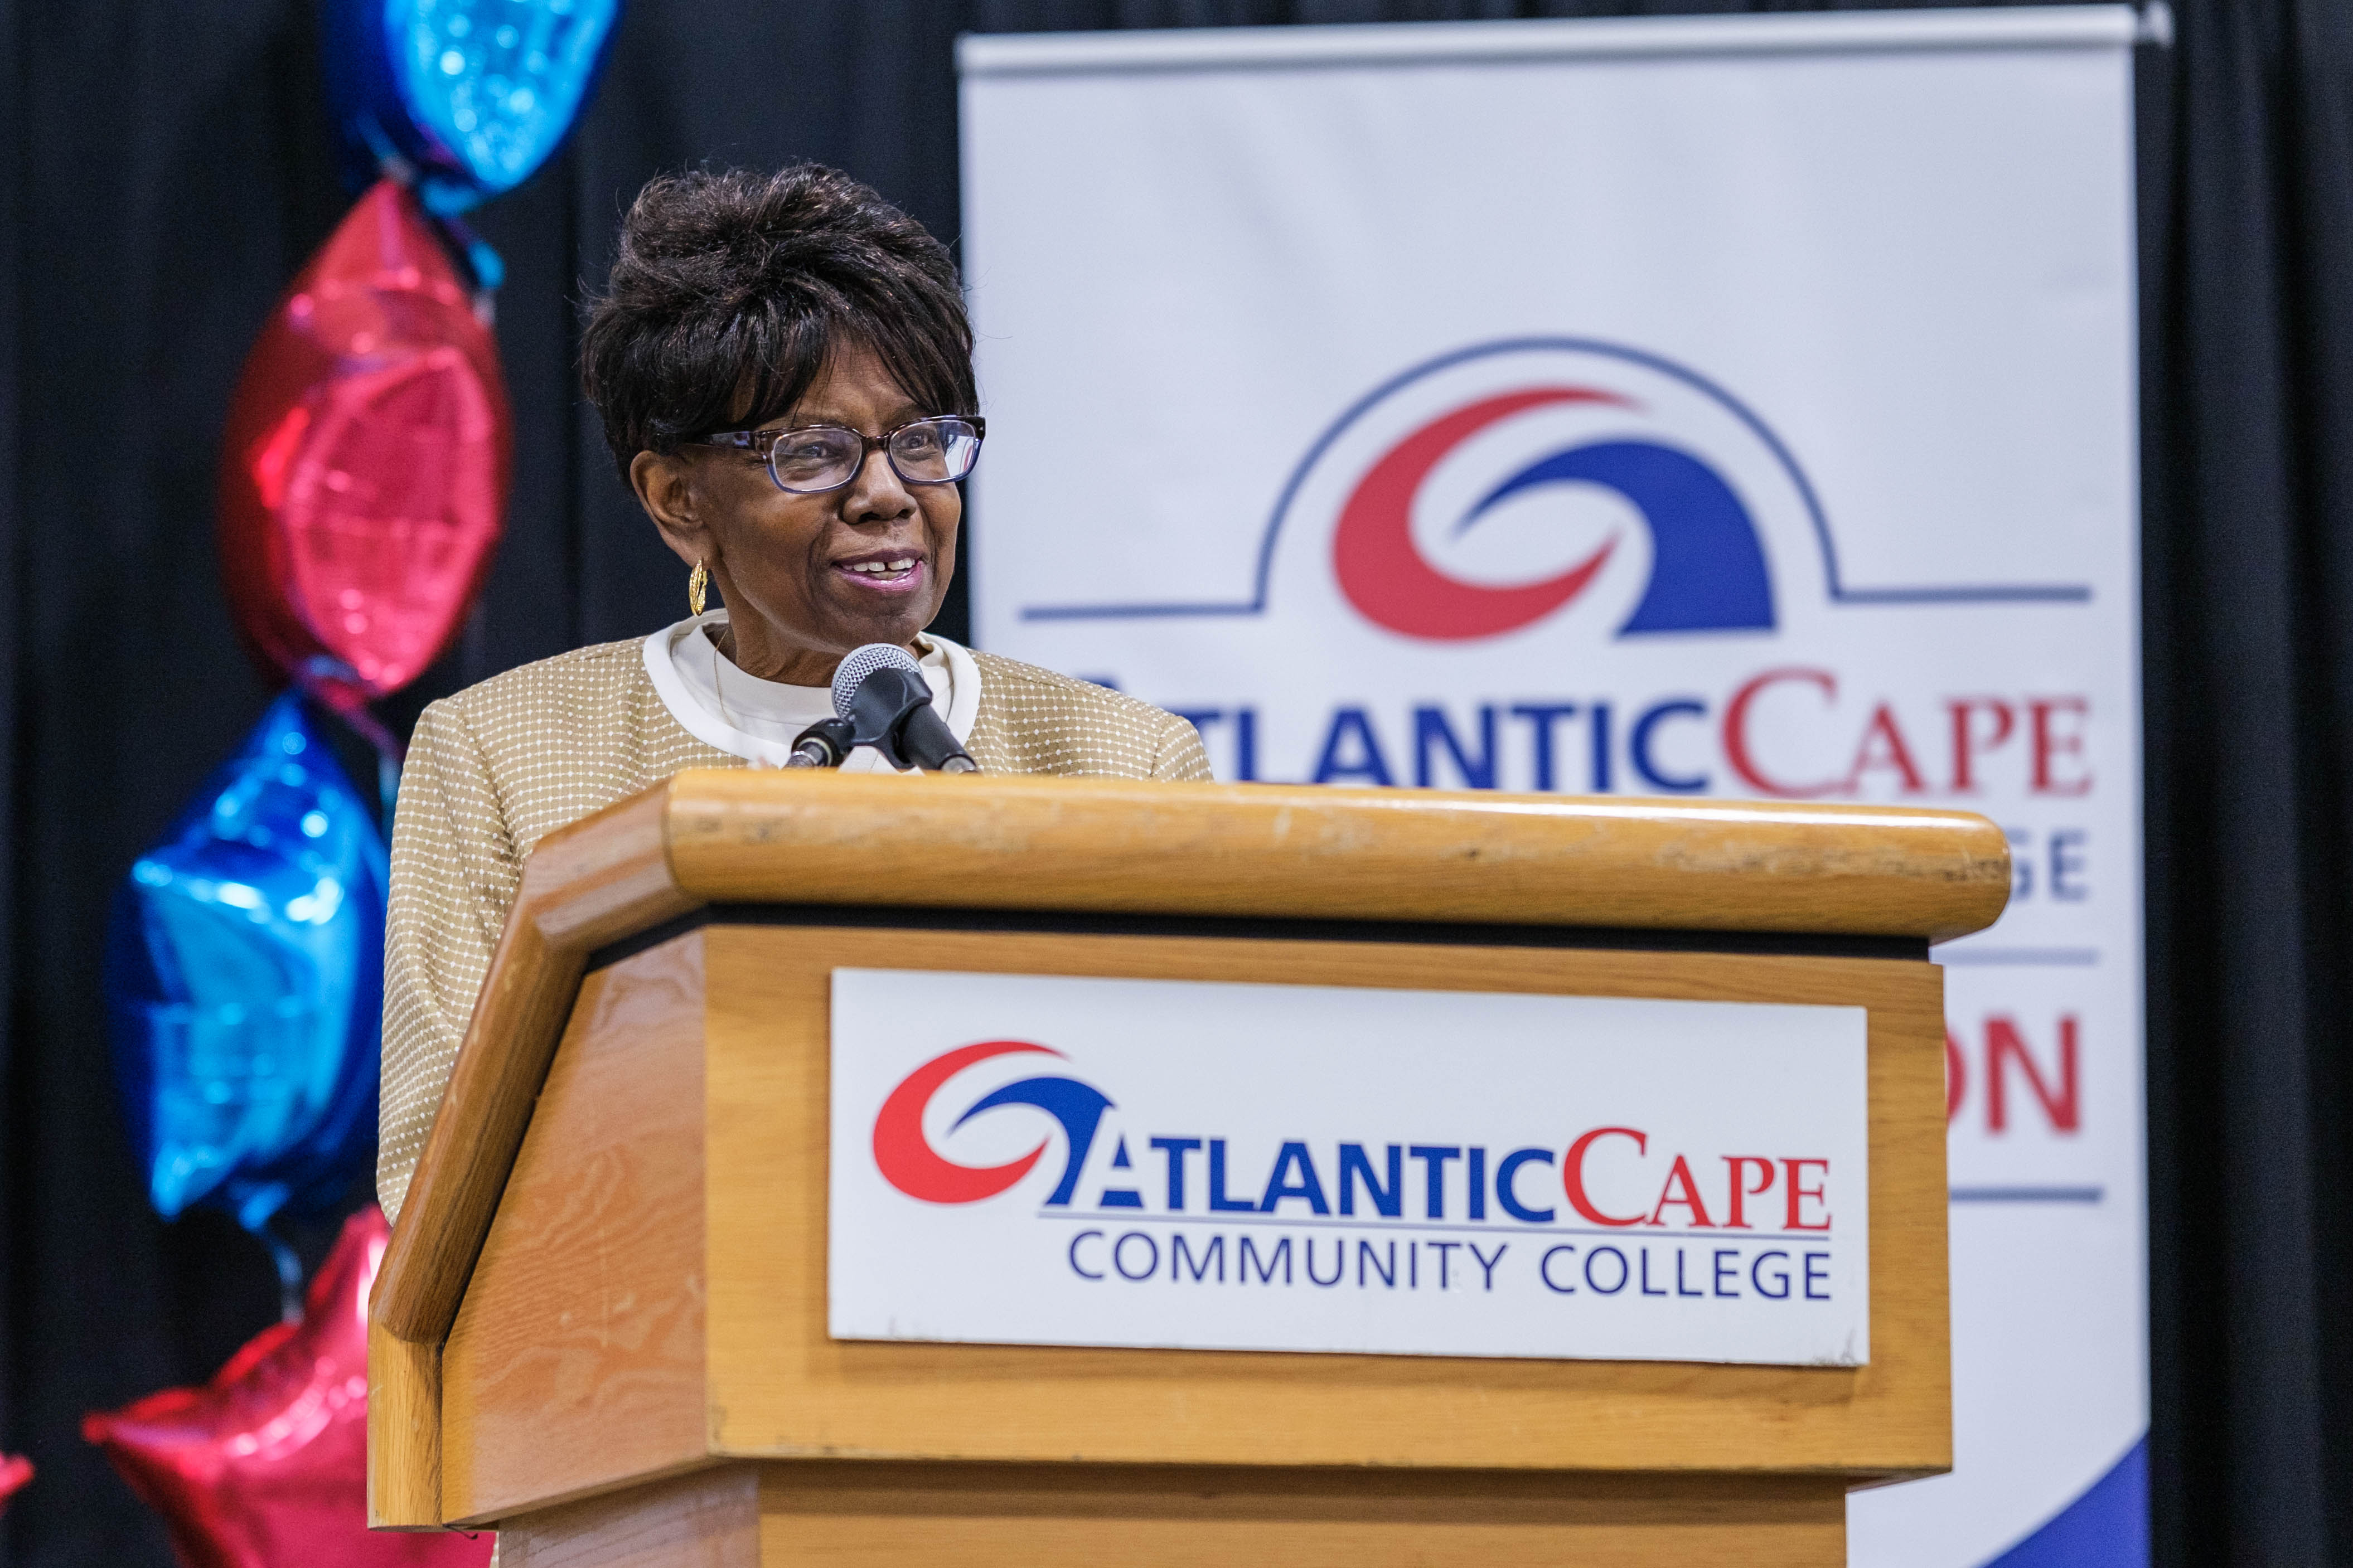 Atlantic Cape President Dr. Barbara Gaba speaking to the audience